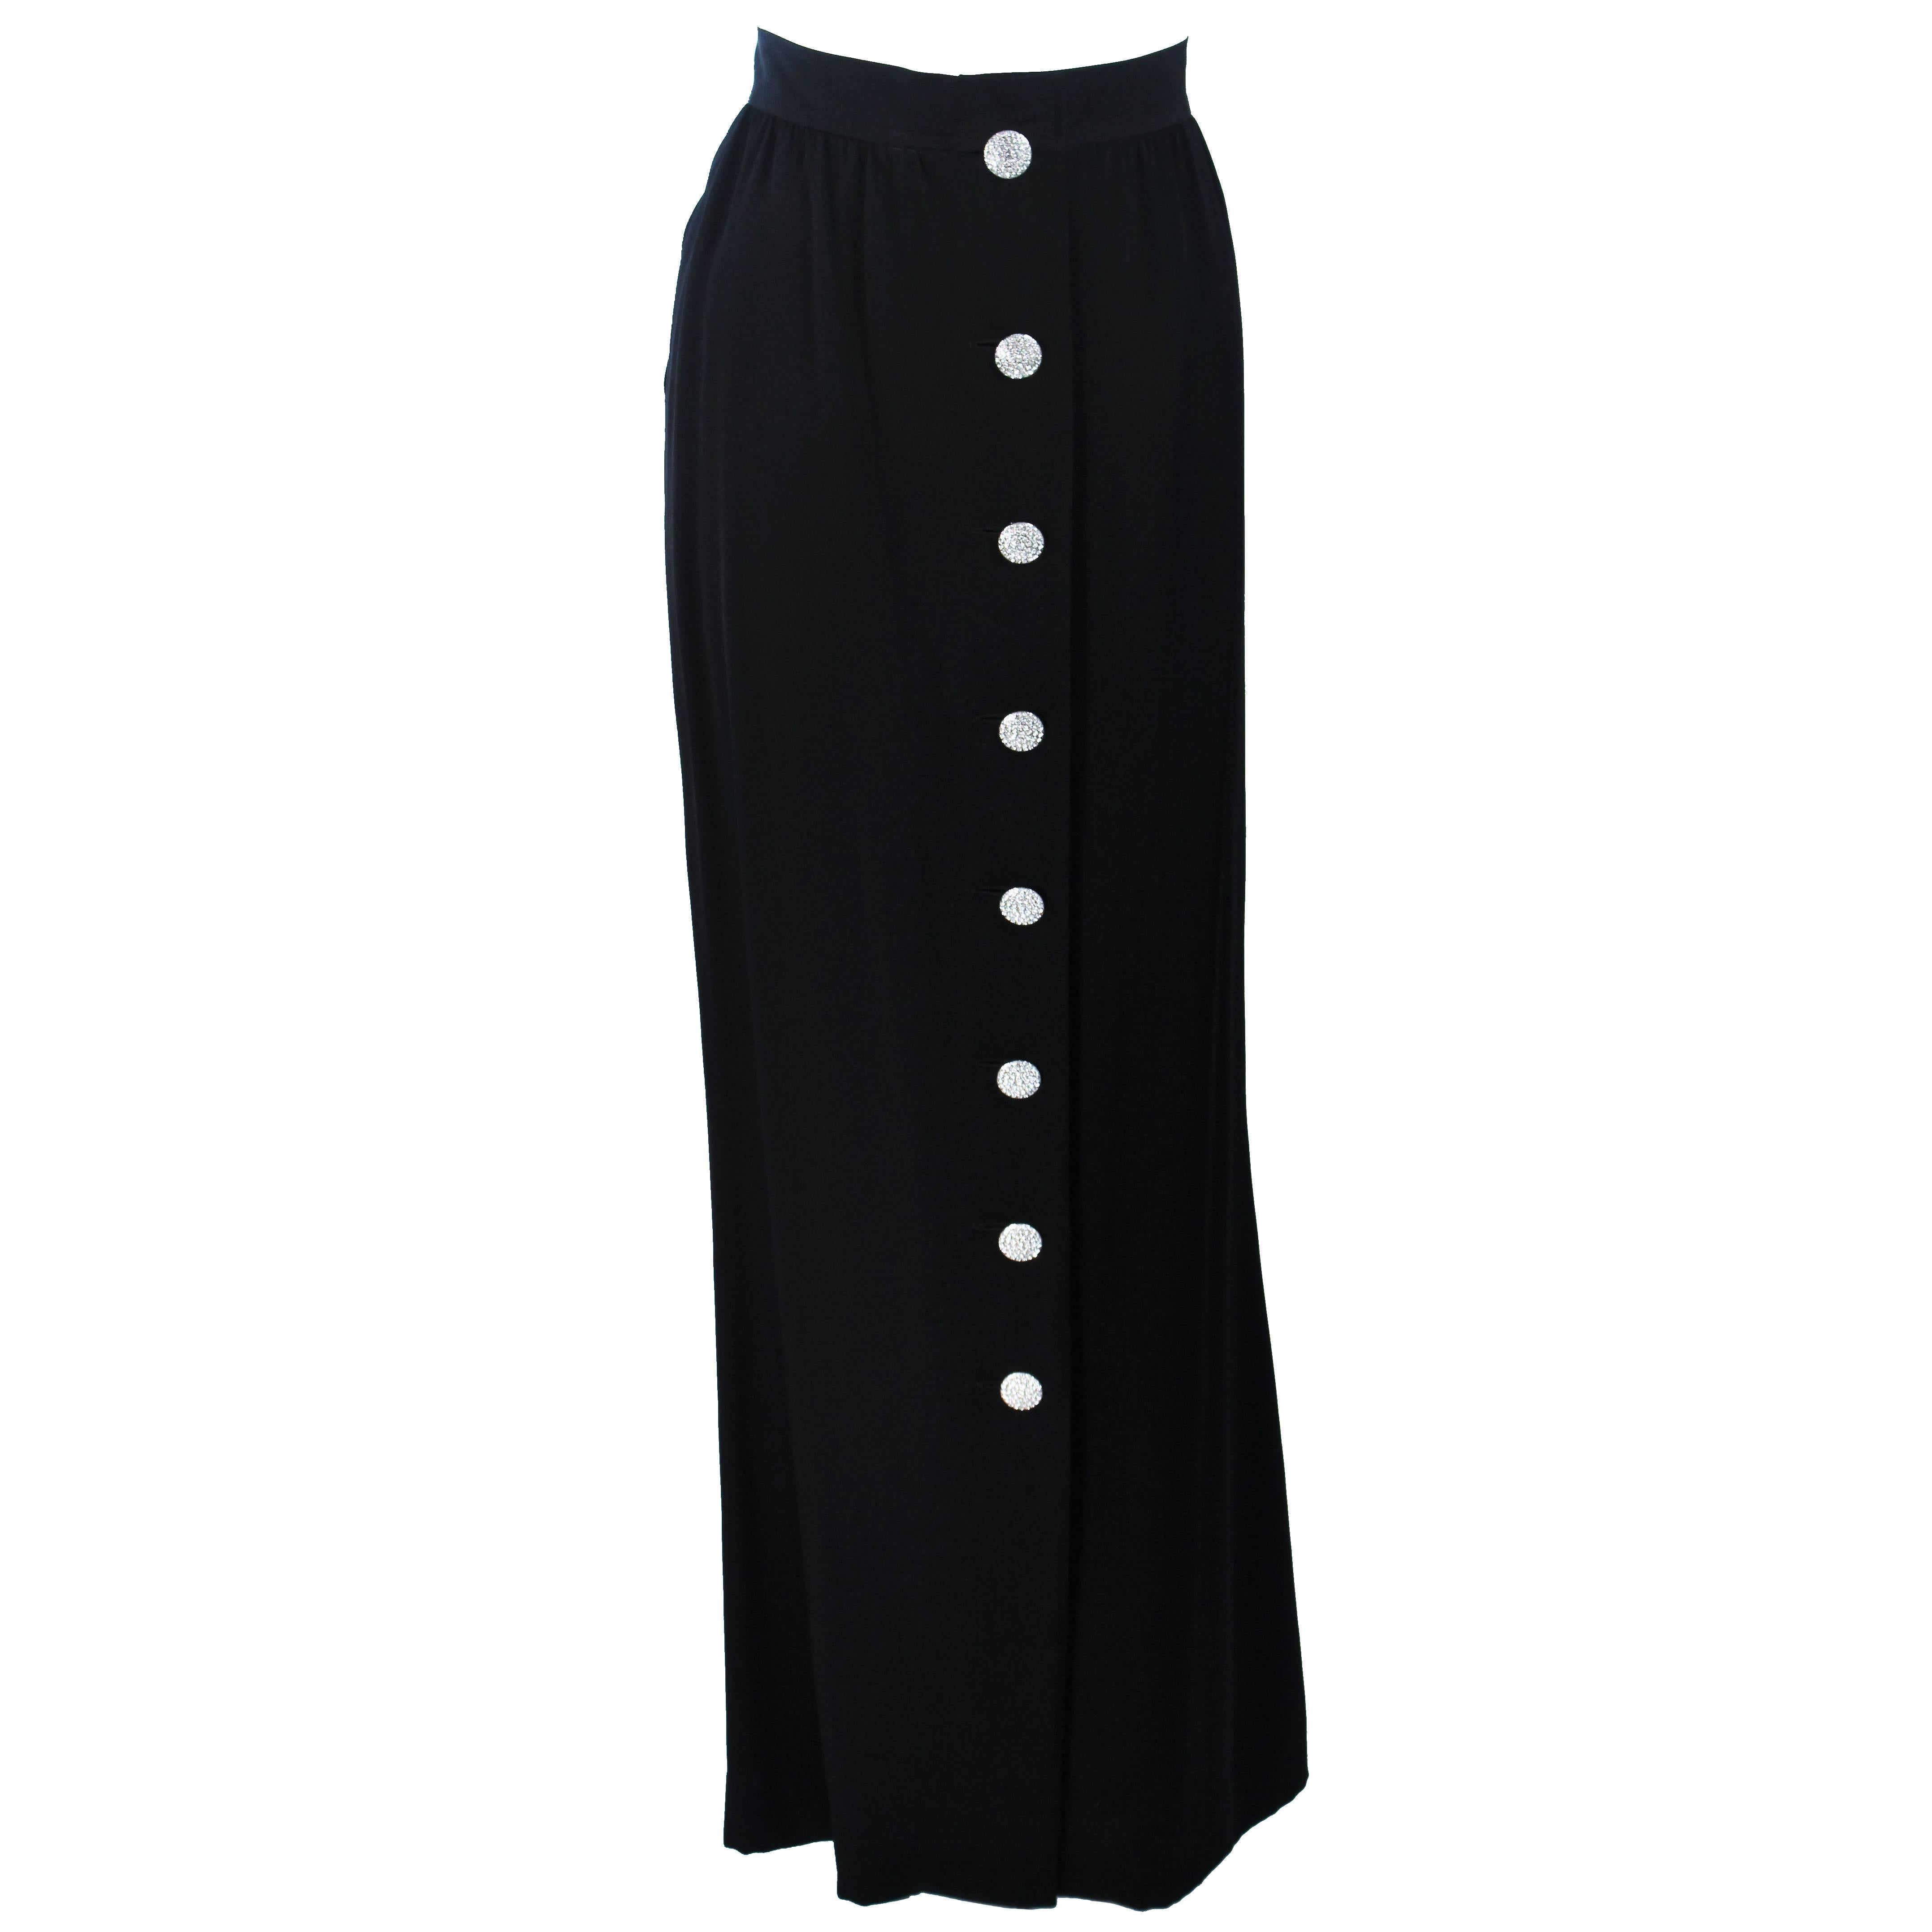 YVES SAINT LAURENT Black Full Length Skirt with Rhinestone Buttons Size 44 For Sale